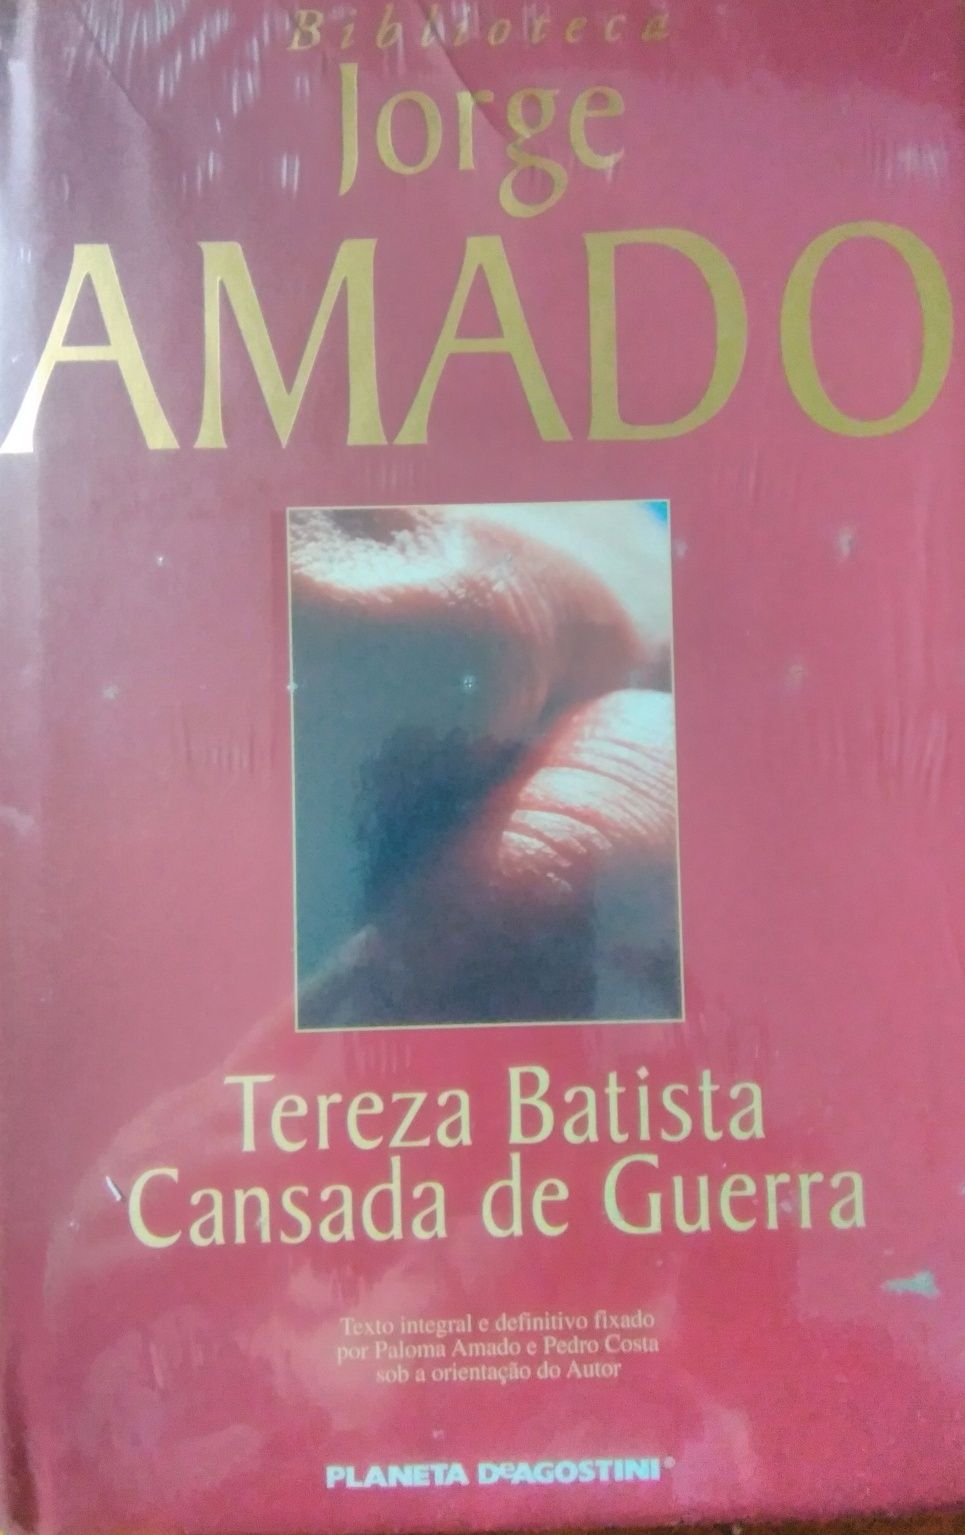 Livro de Jorge Amado,""Teresa Batista Cansada de Guerra", porte grat